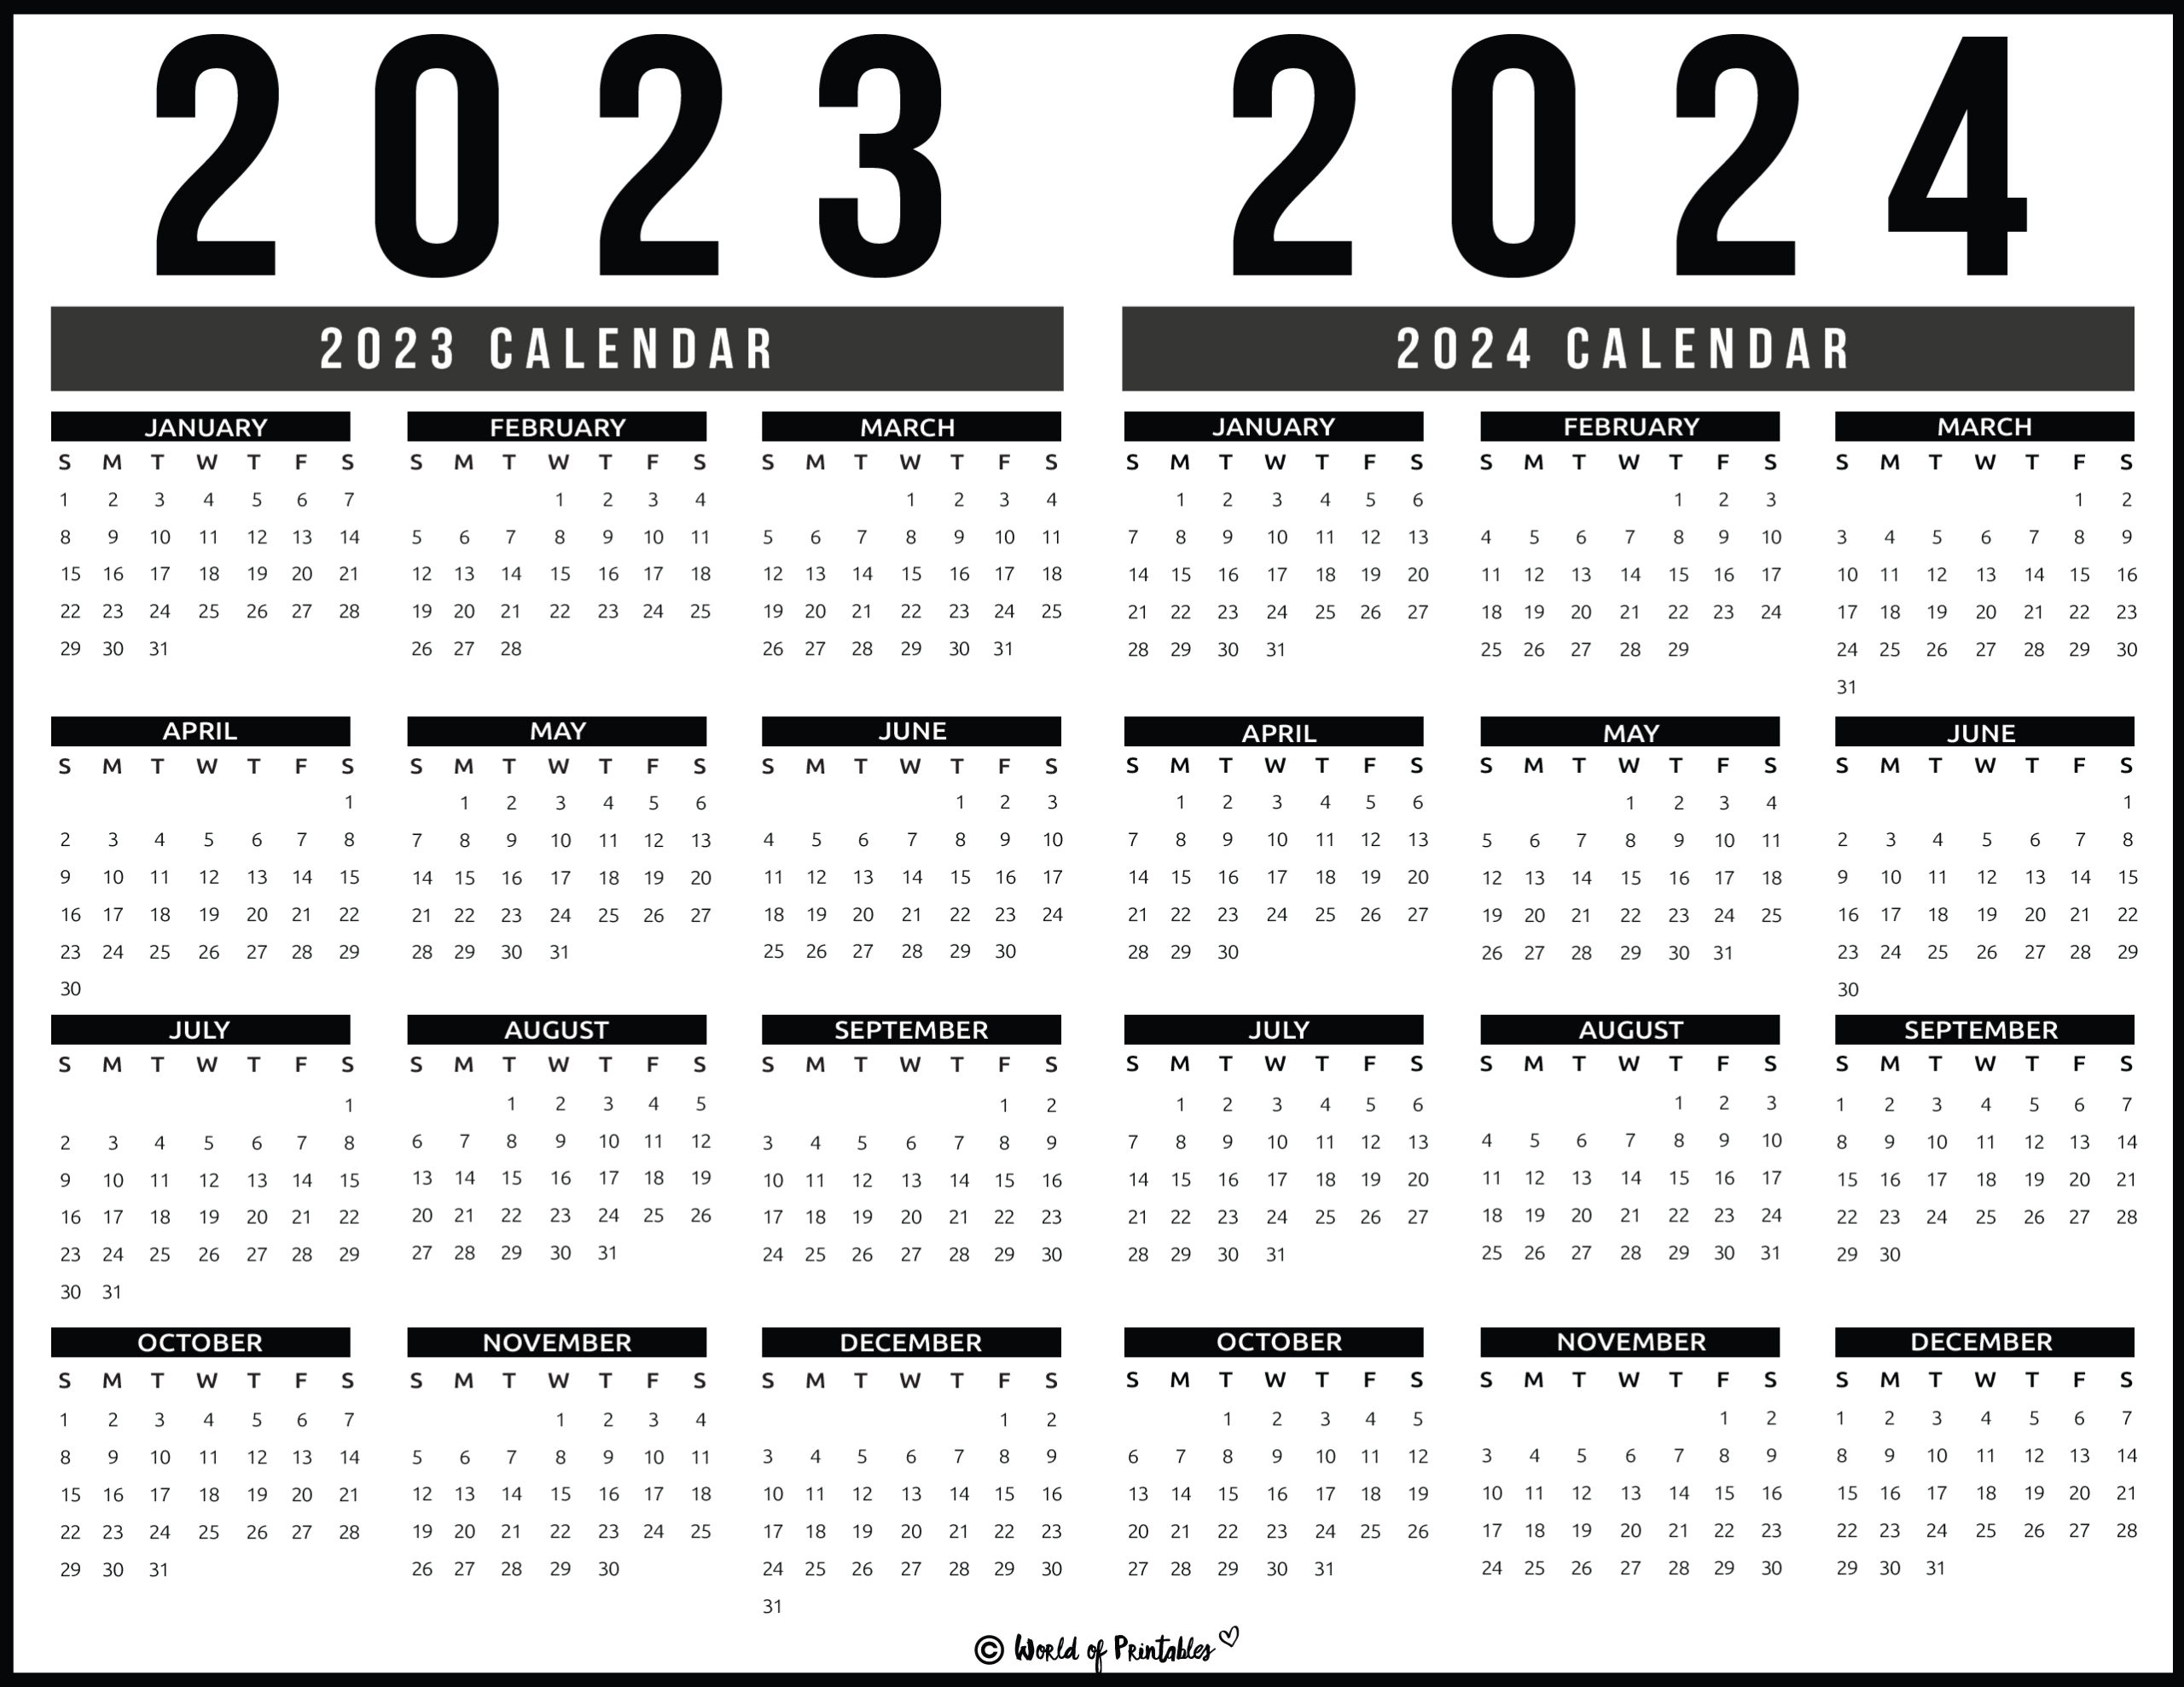 2023 2024 Calendar Free Printables - World Of Printables | Yearly Calendar 2023 And 2024 Printable